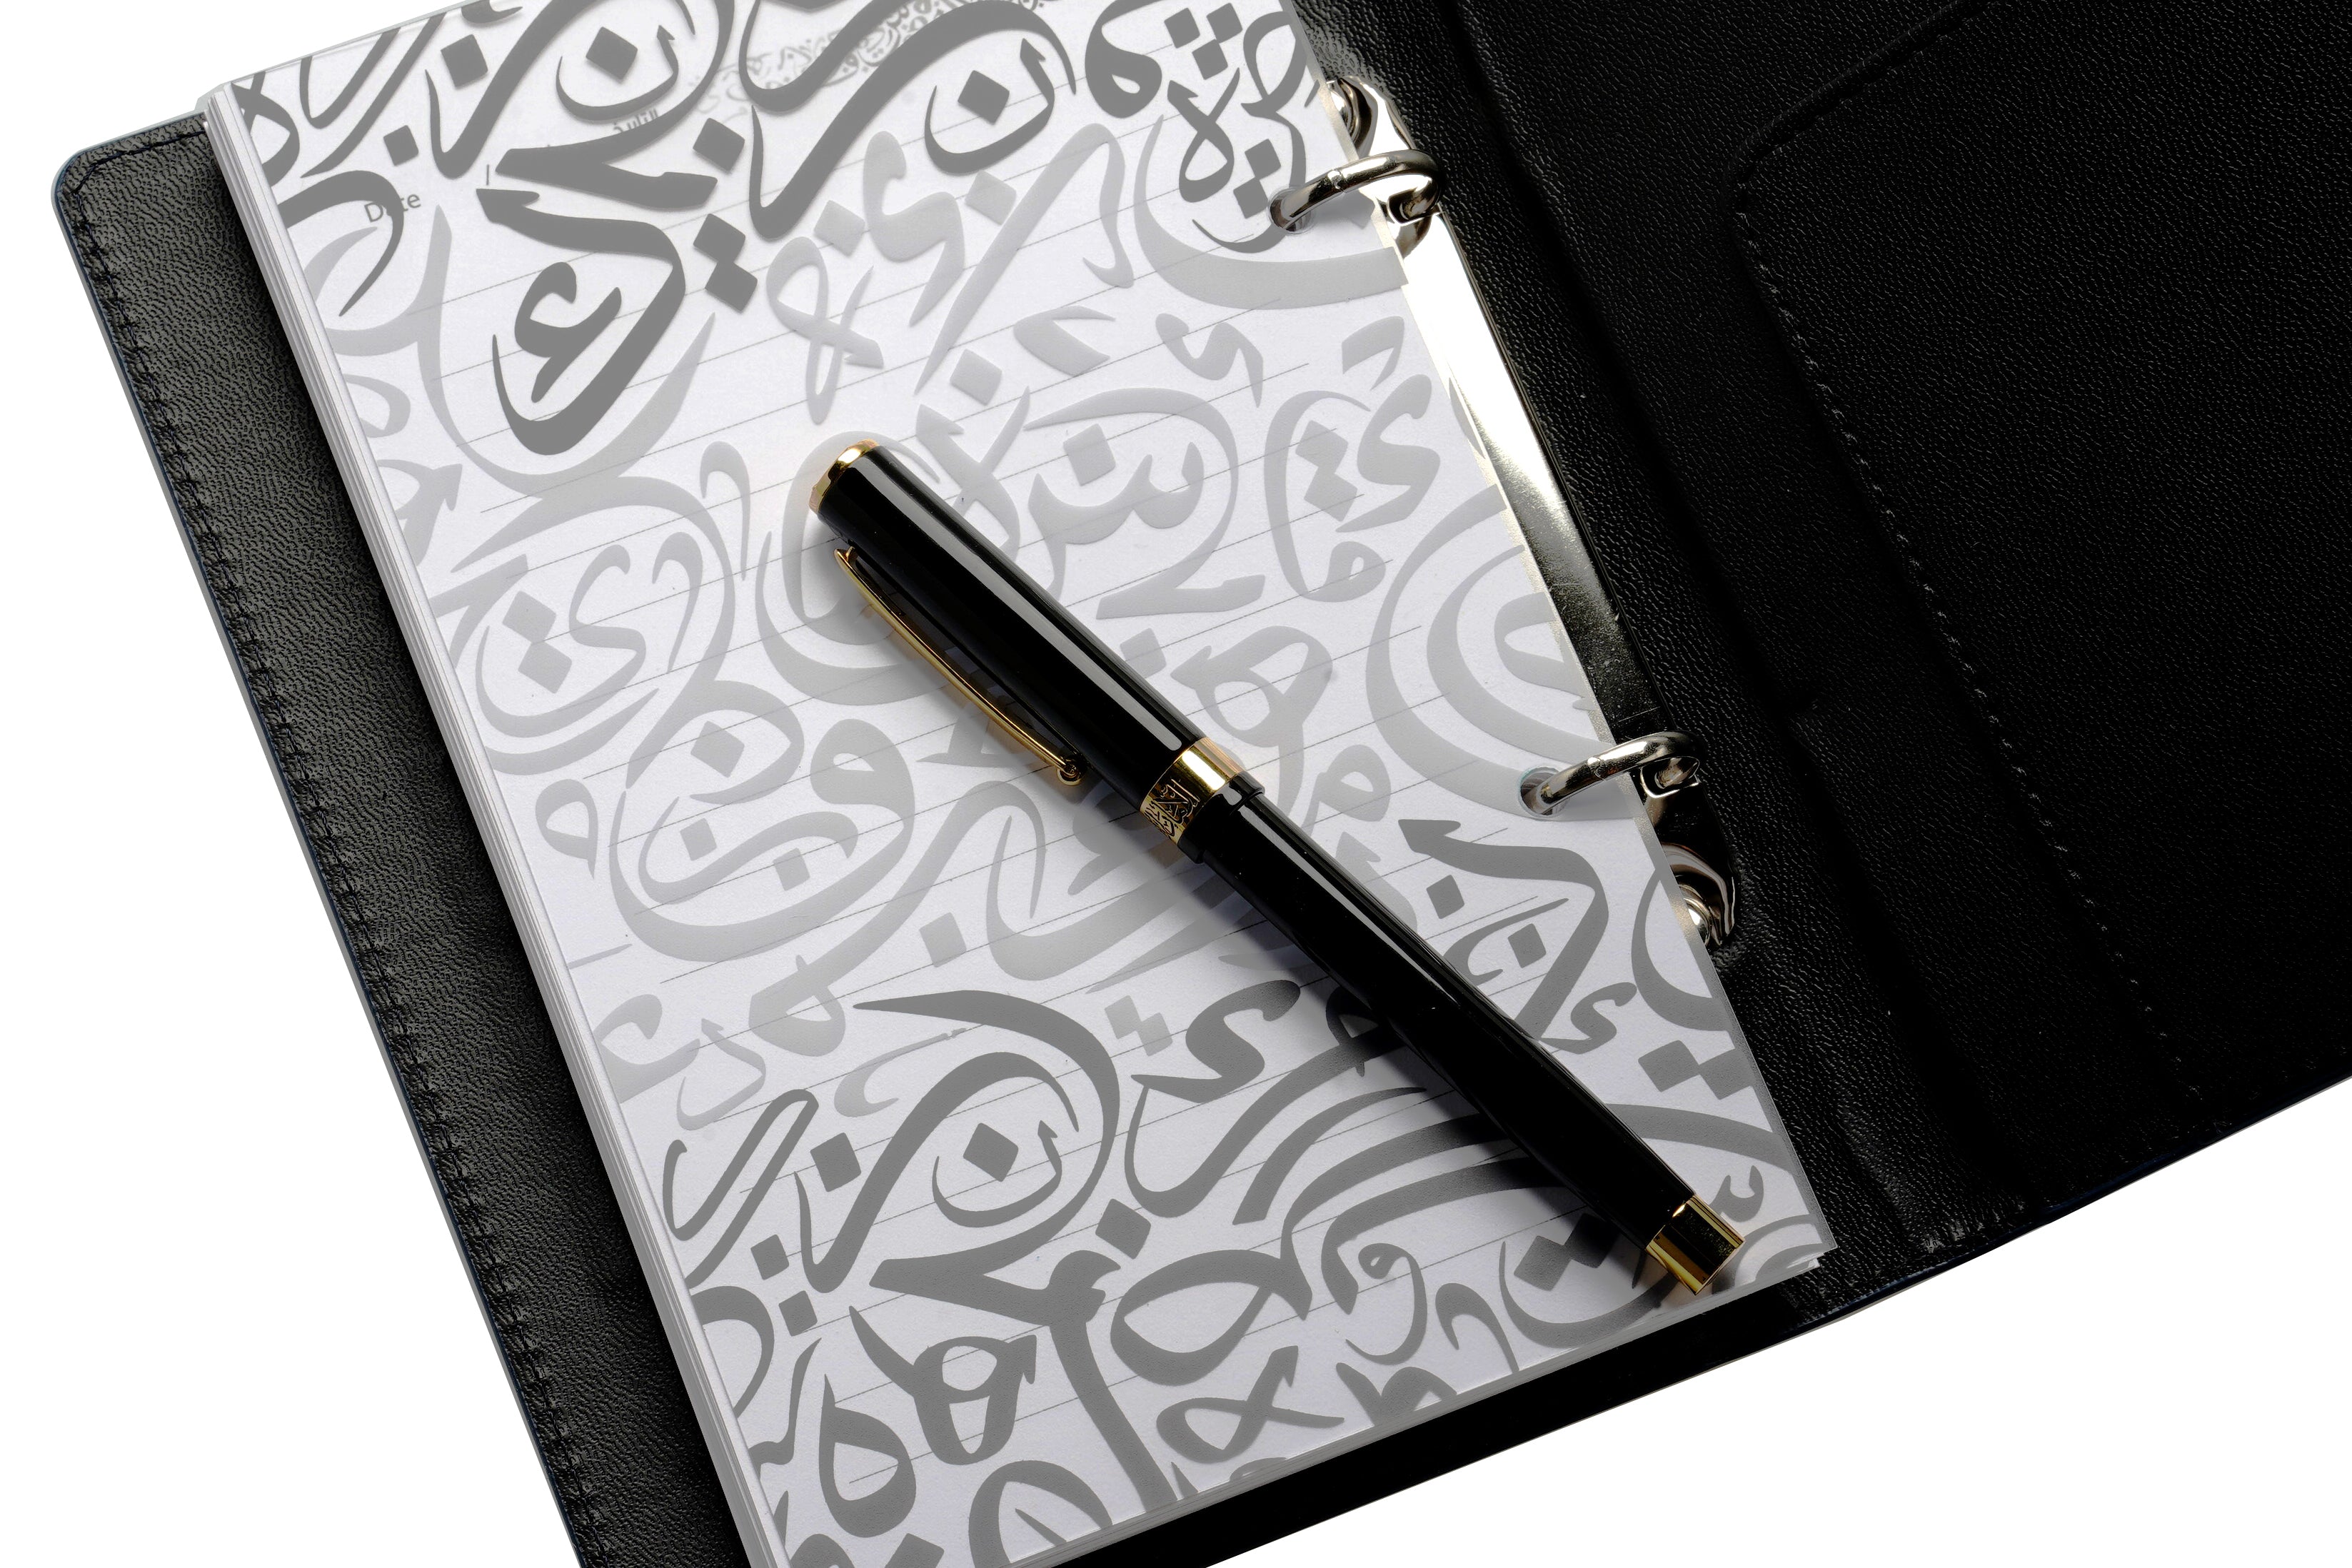 Rovatti Notebook Mohammad Bin Rashid | best stationary gifts | uae gift ideas